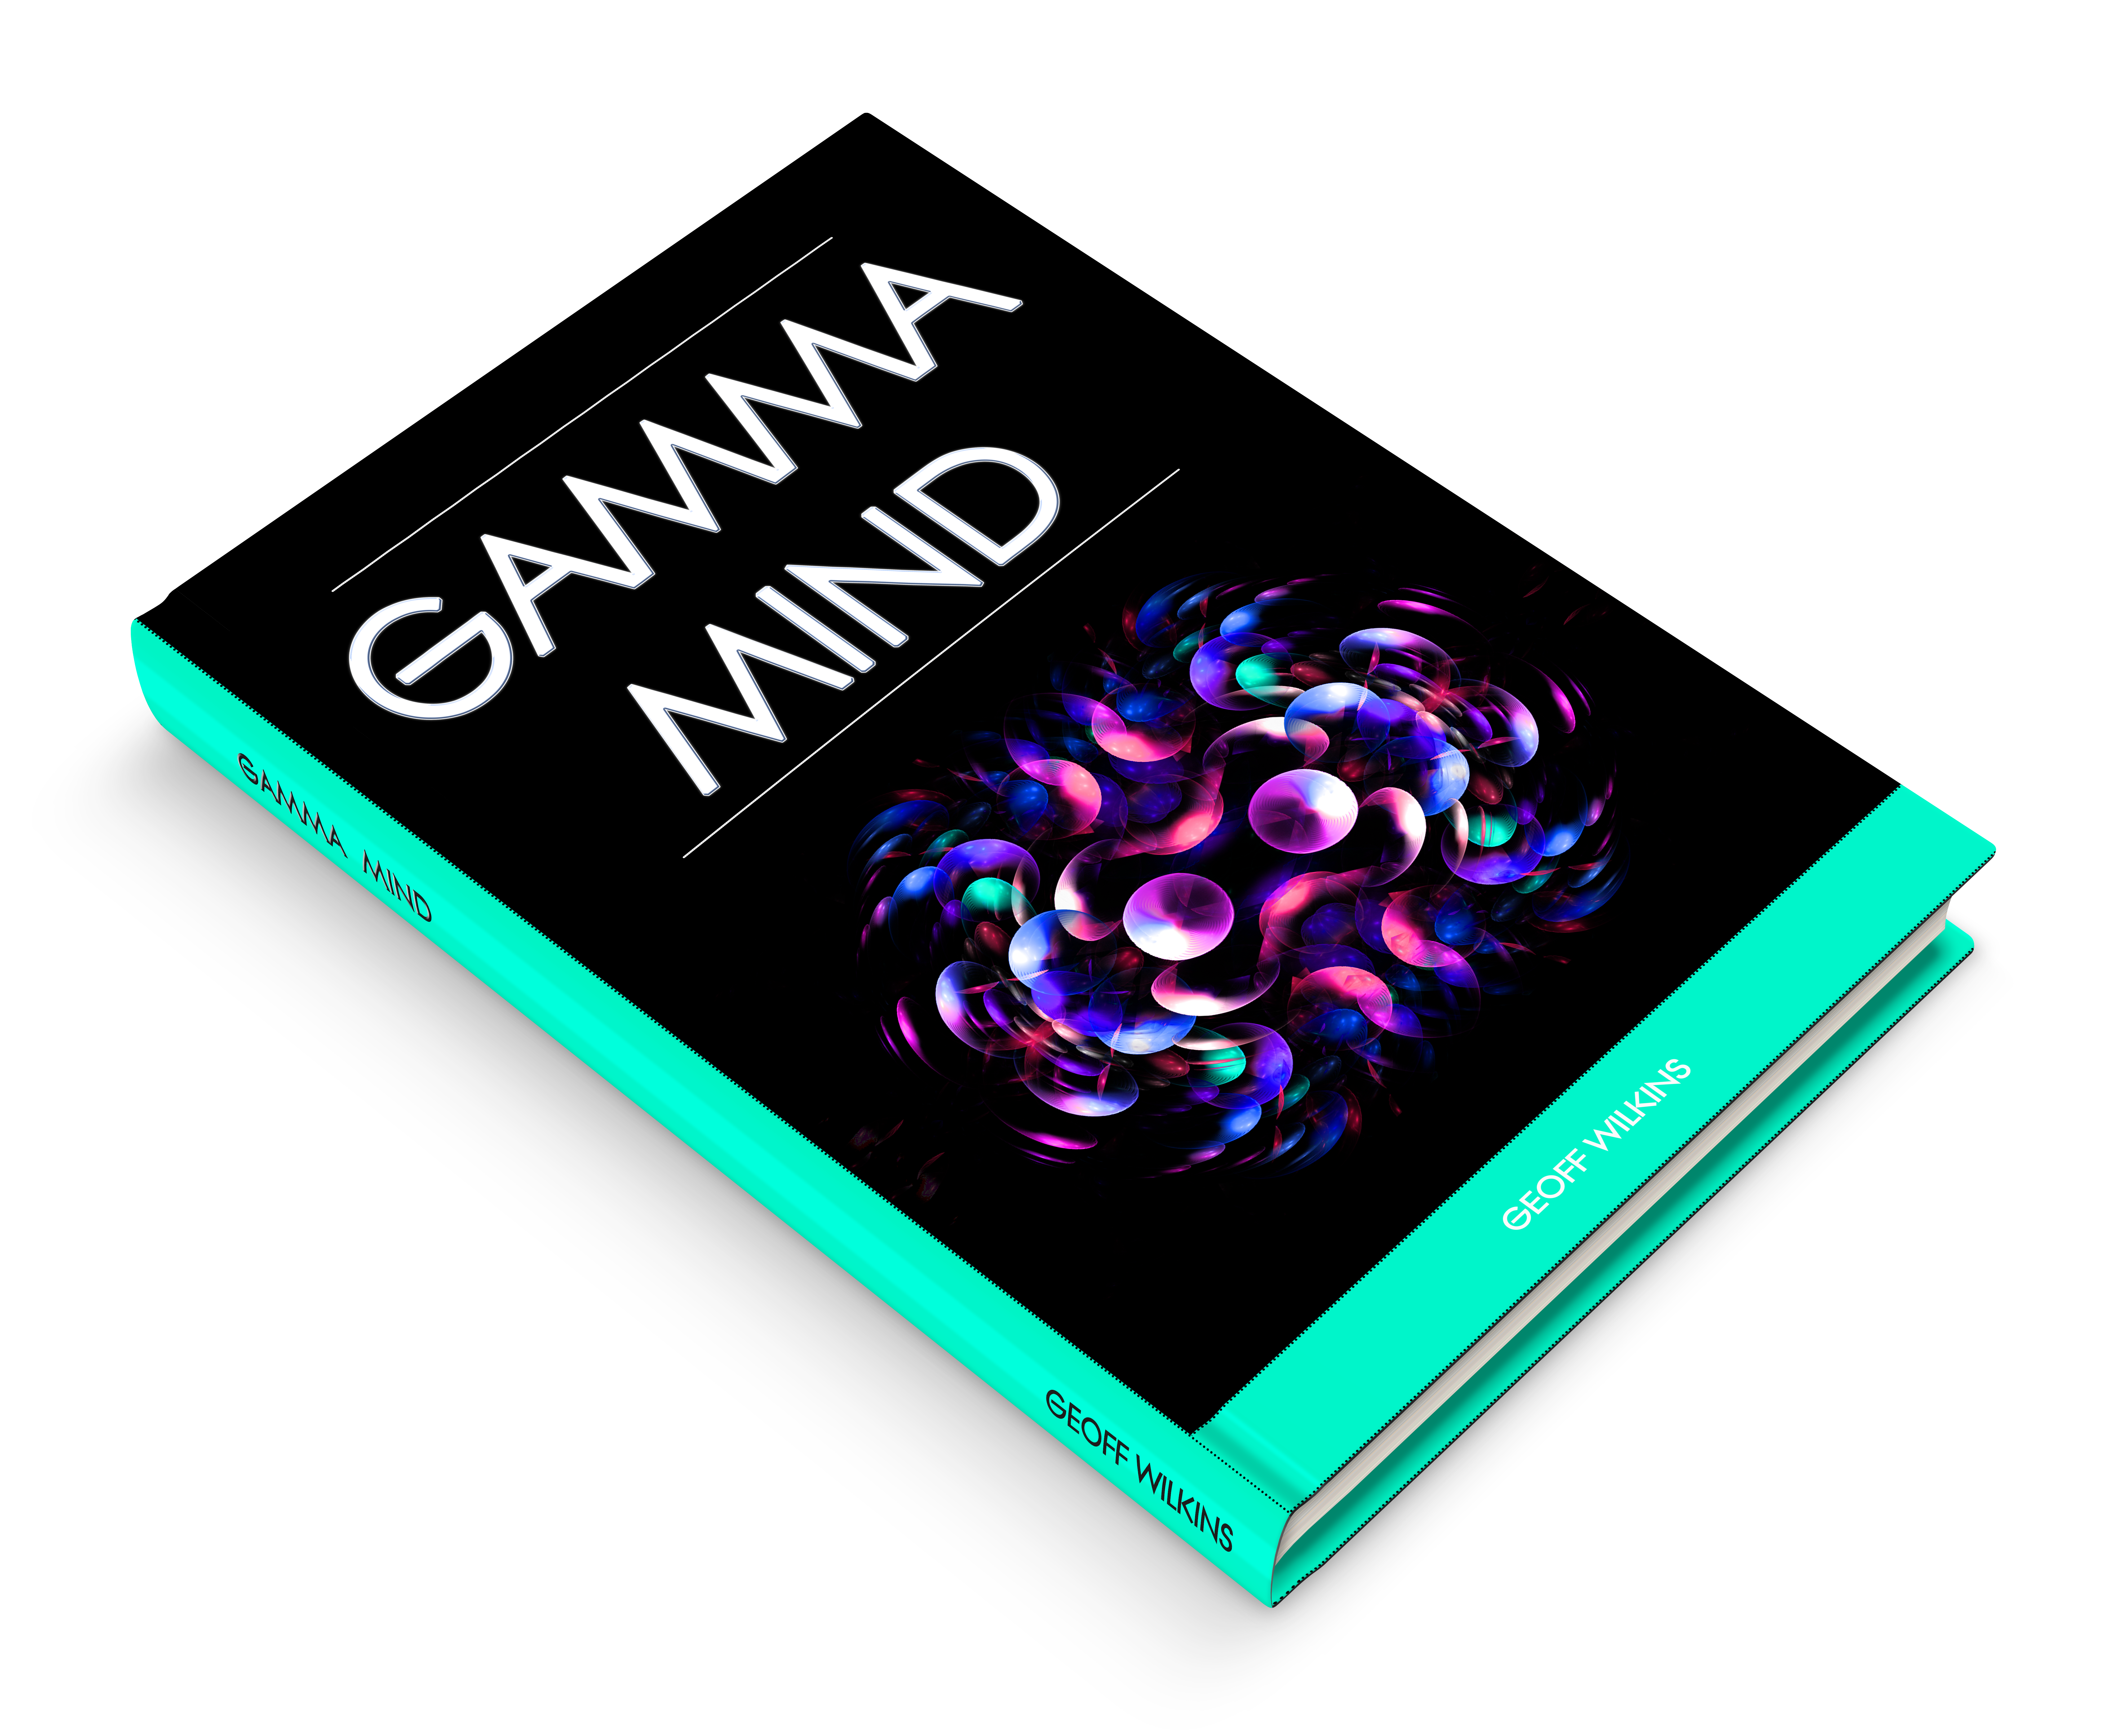 Free Gamma Mind ebook by Geoff Wilkins at www.brainwaveentrainmentstore.com